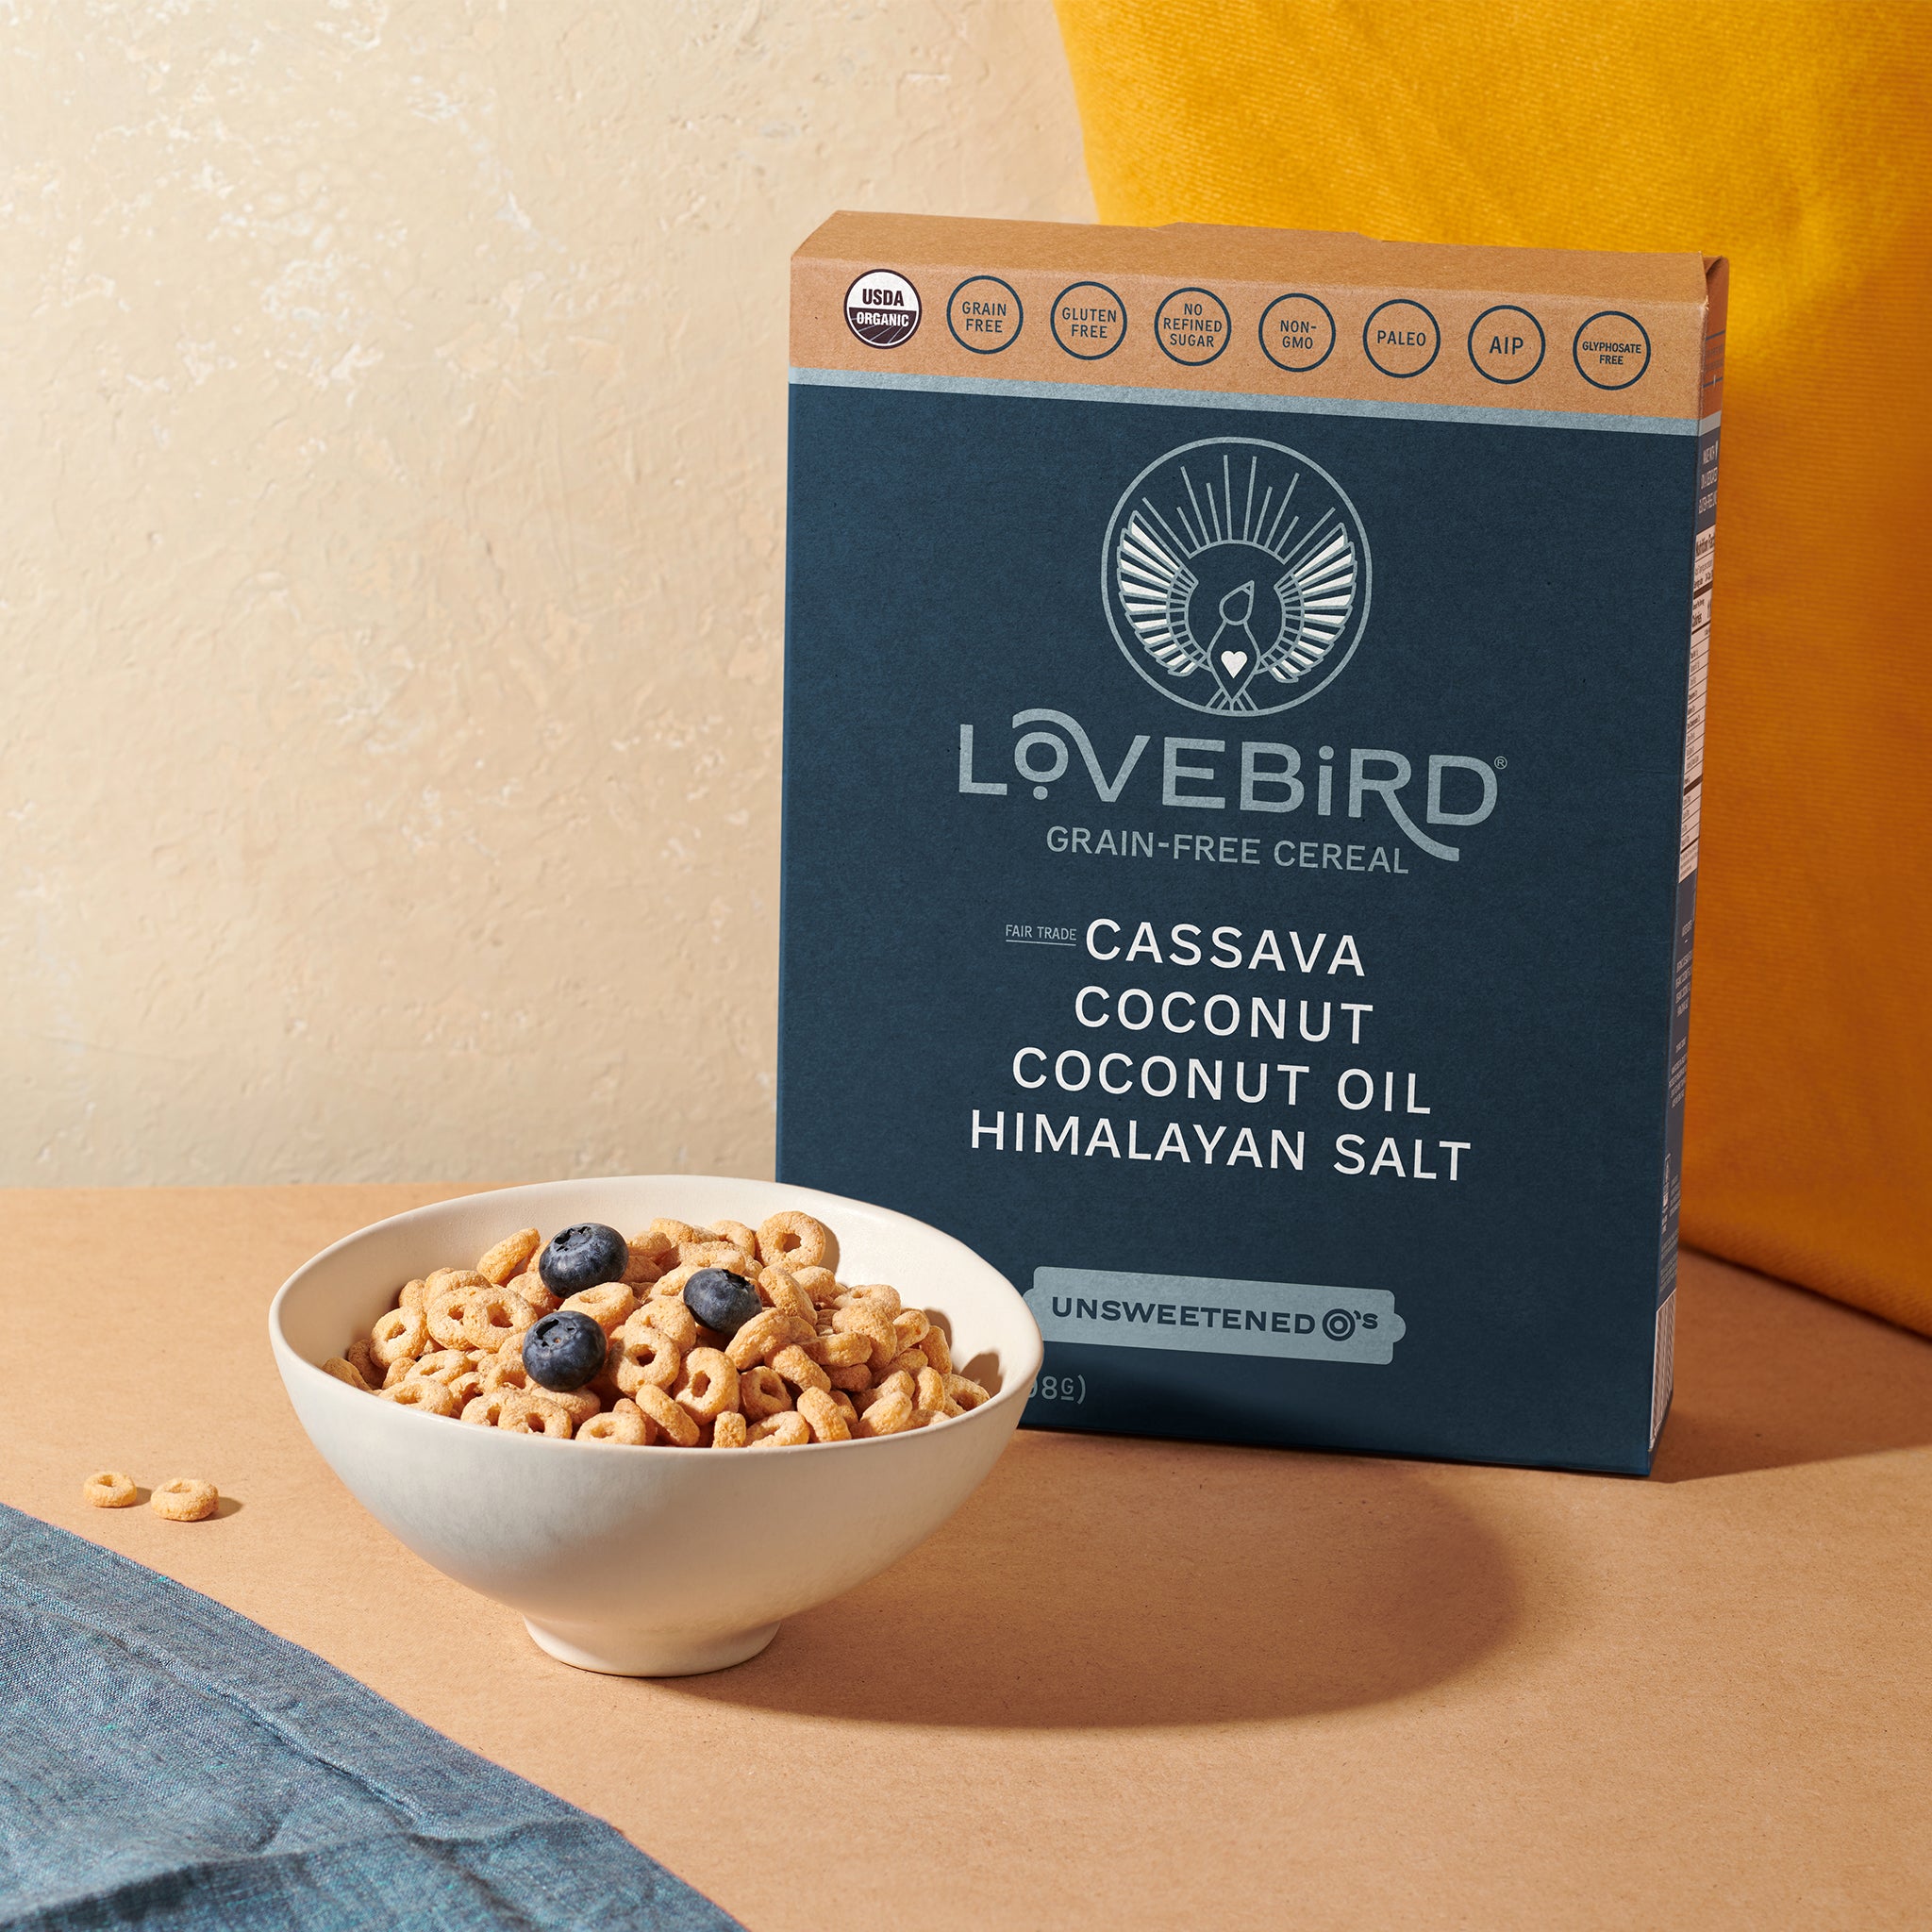 Lovebird Cereal Sampler Pack